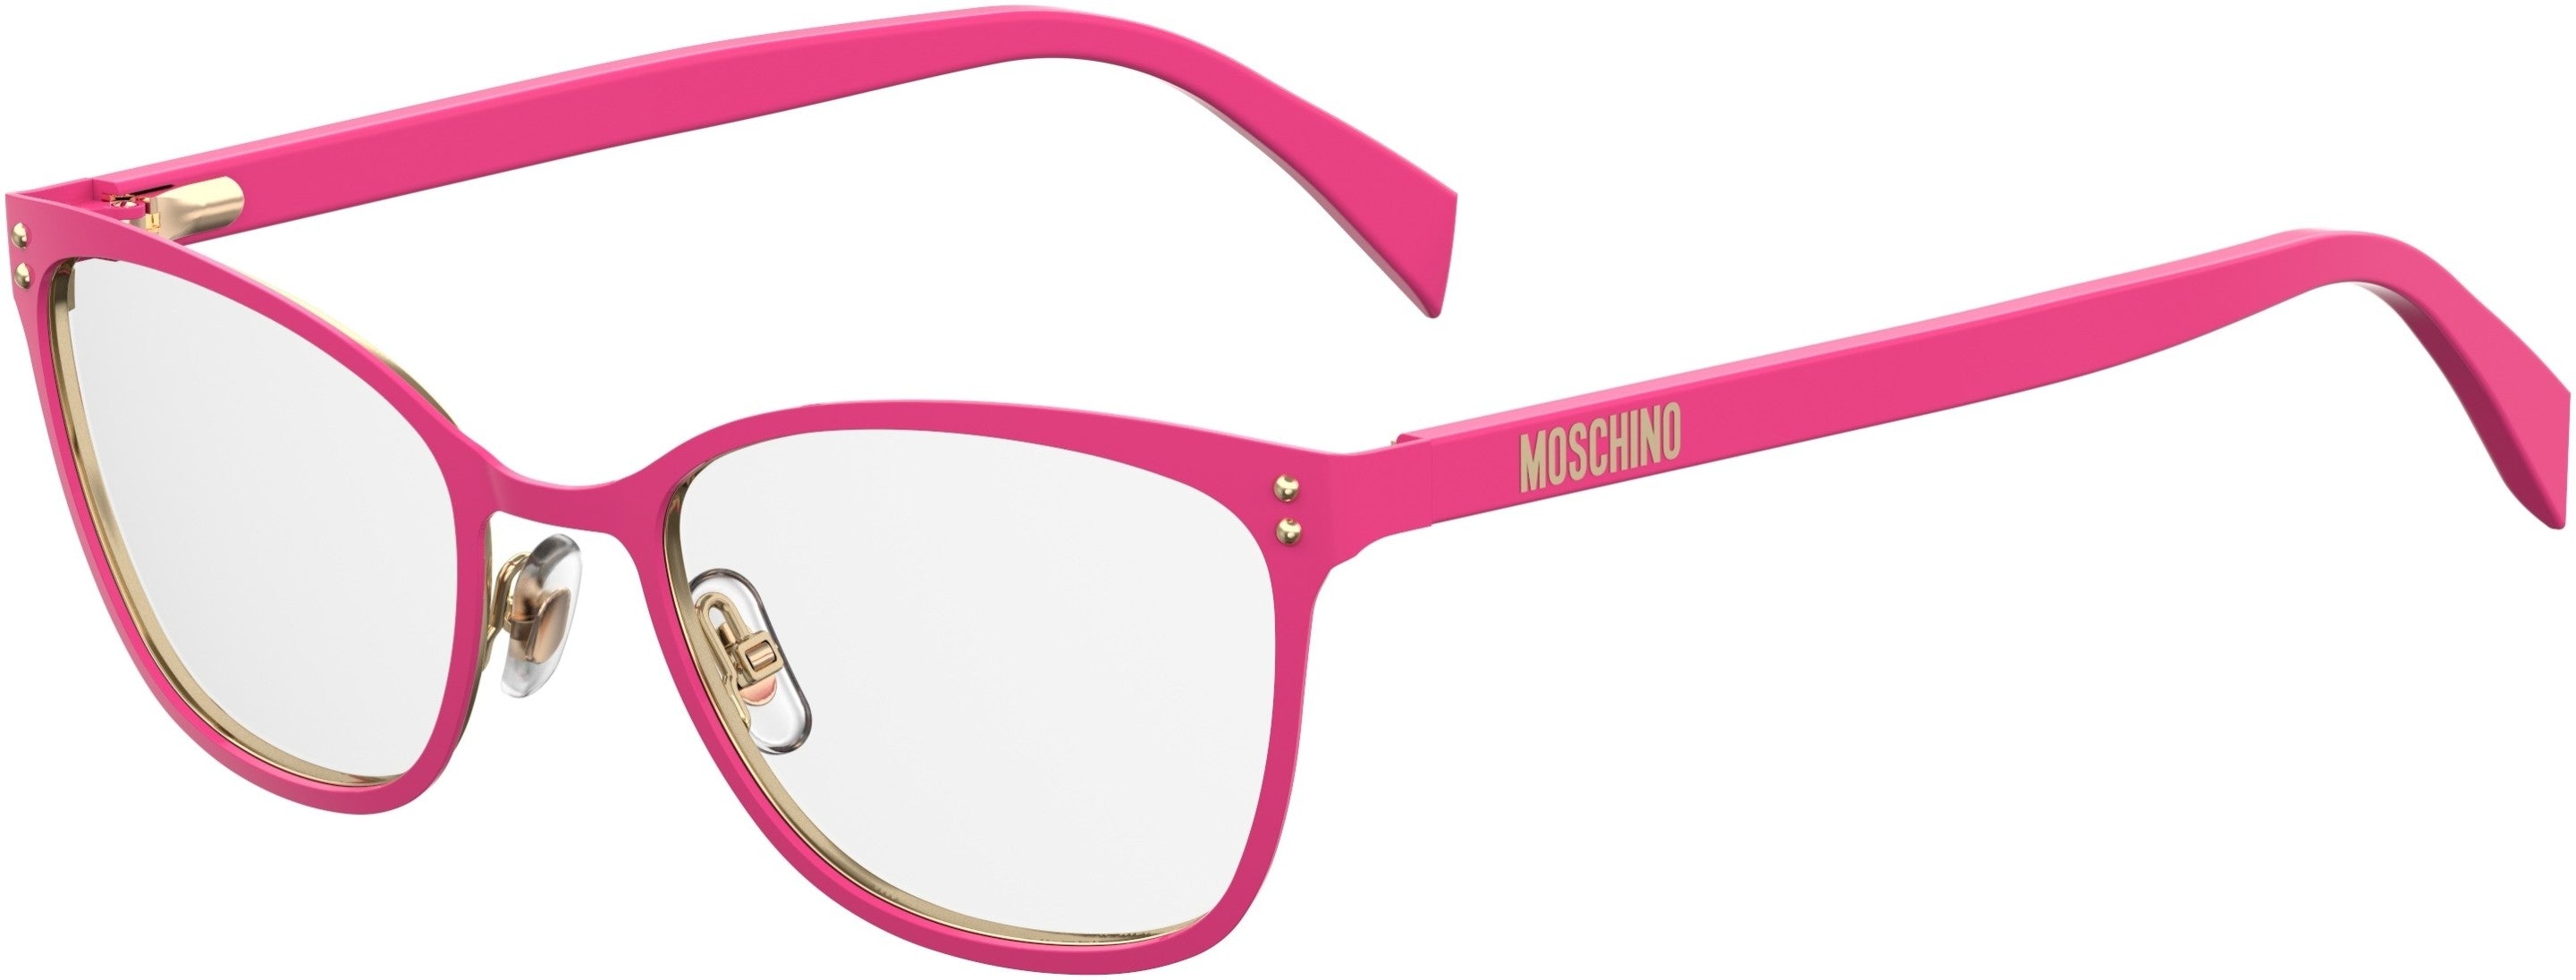  Moschino 511 Square Eyeglasses 0MU1-0MU1  Fuchsia (00 Demo Lens)